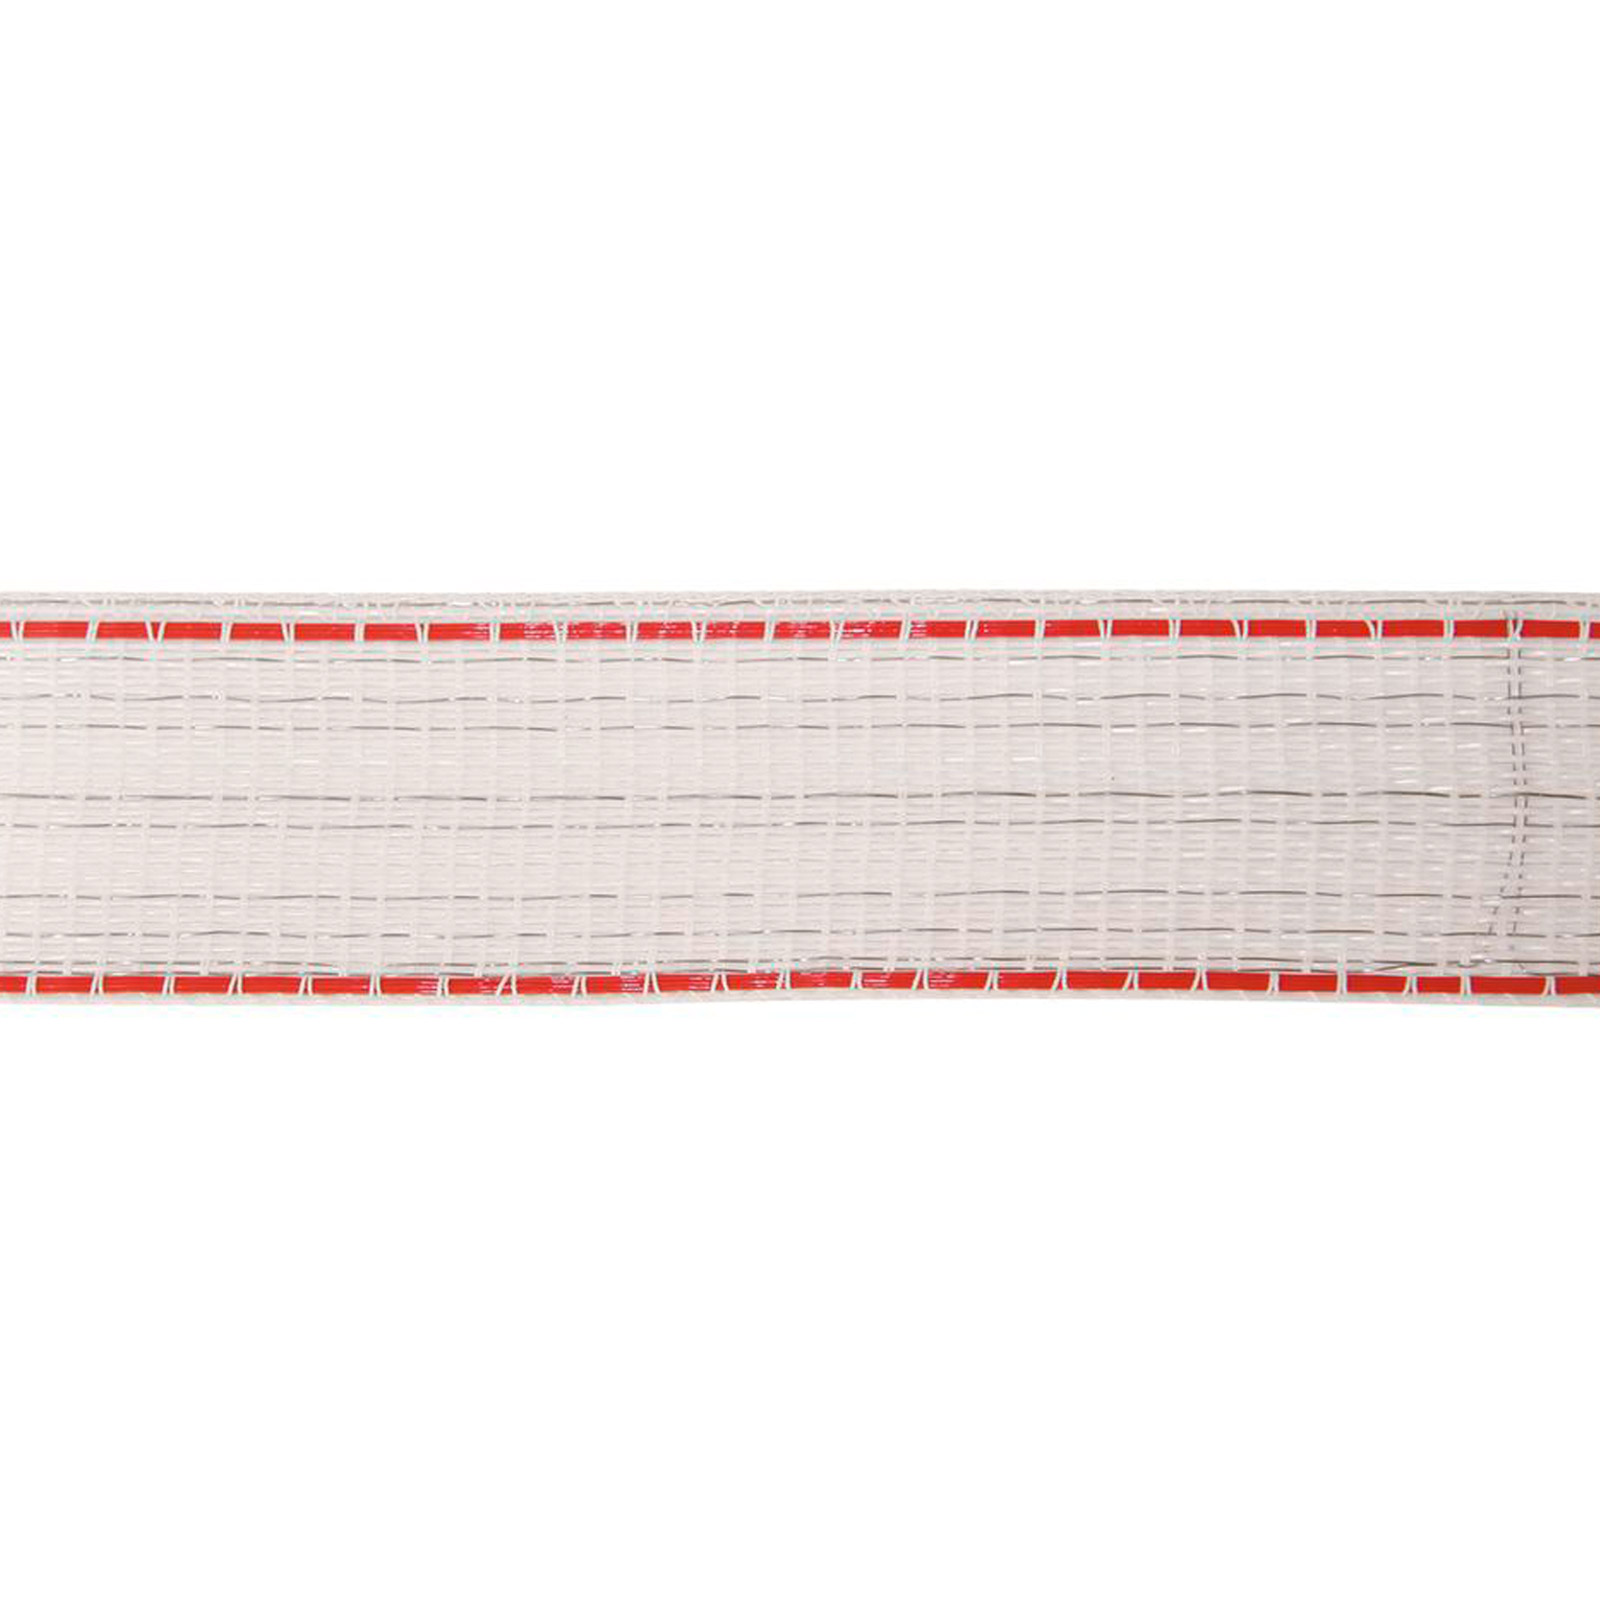 Agrarzone villanypásztor szalag Premium 0.30 TriCOND, fehér-piros 200 m x 40 mm